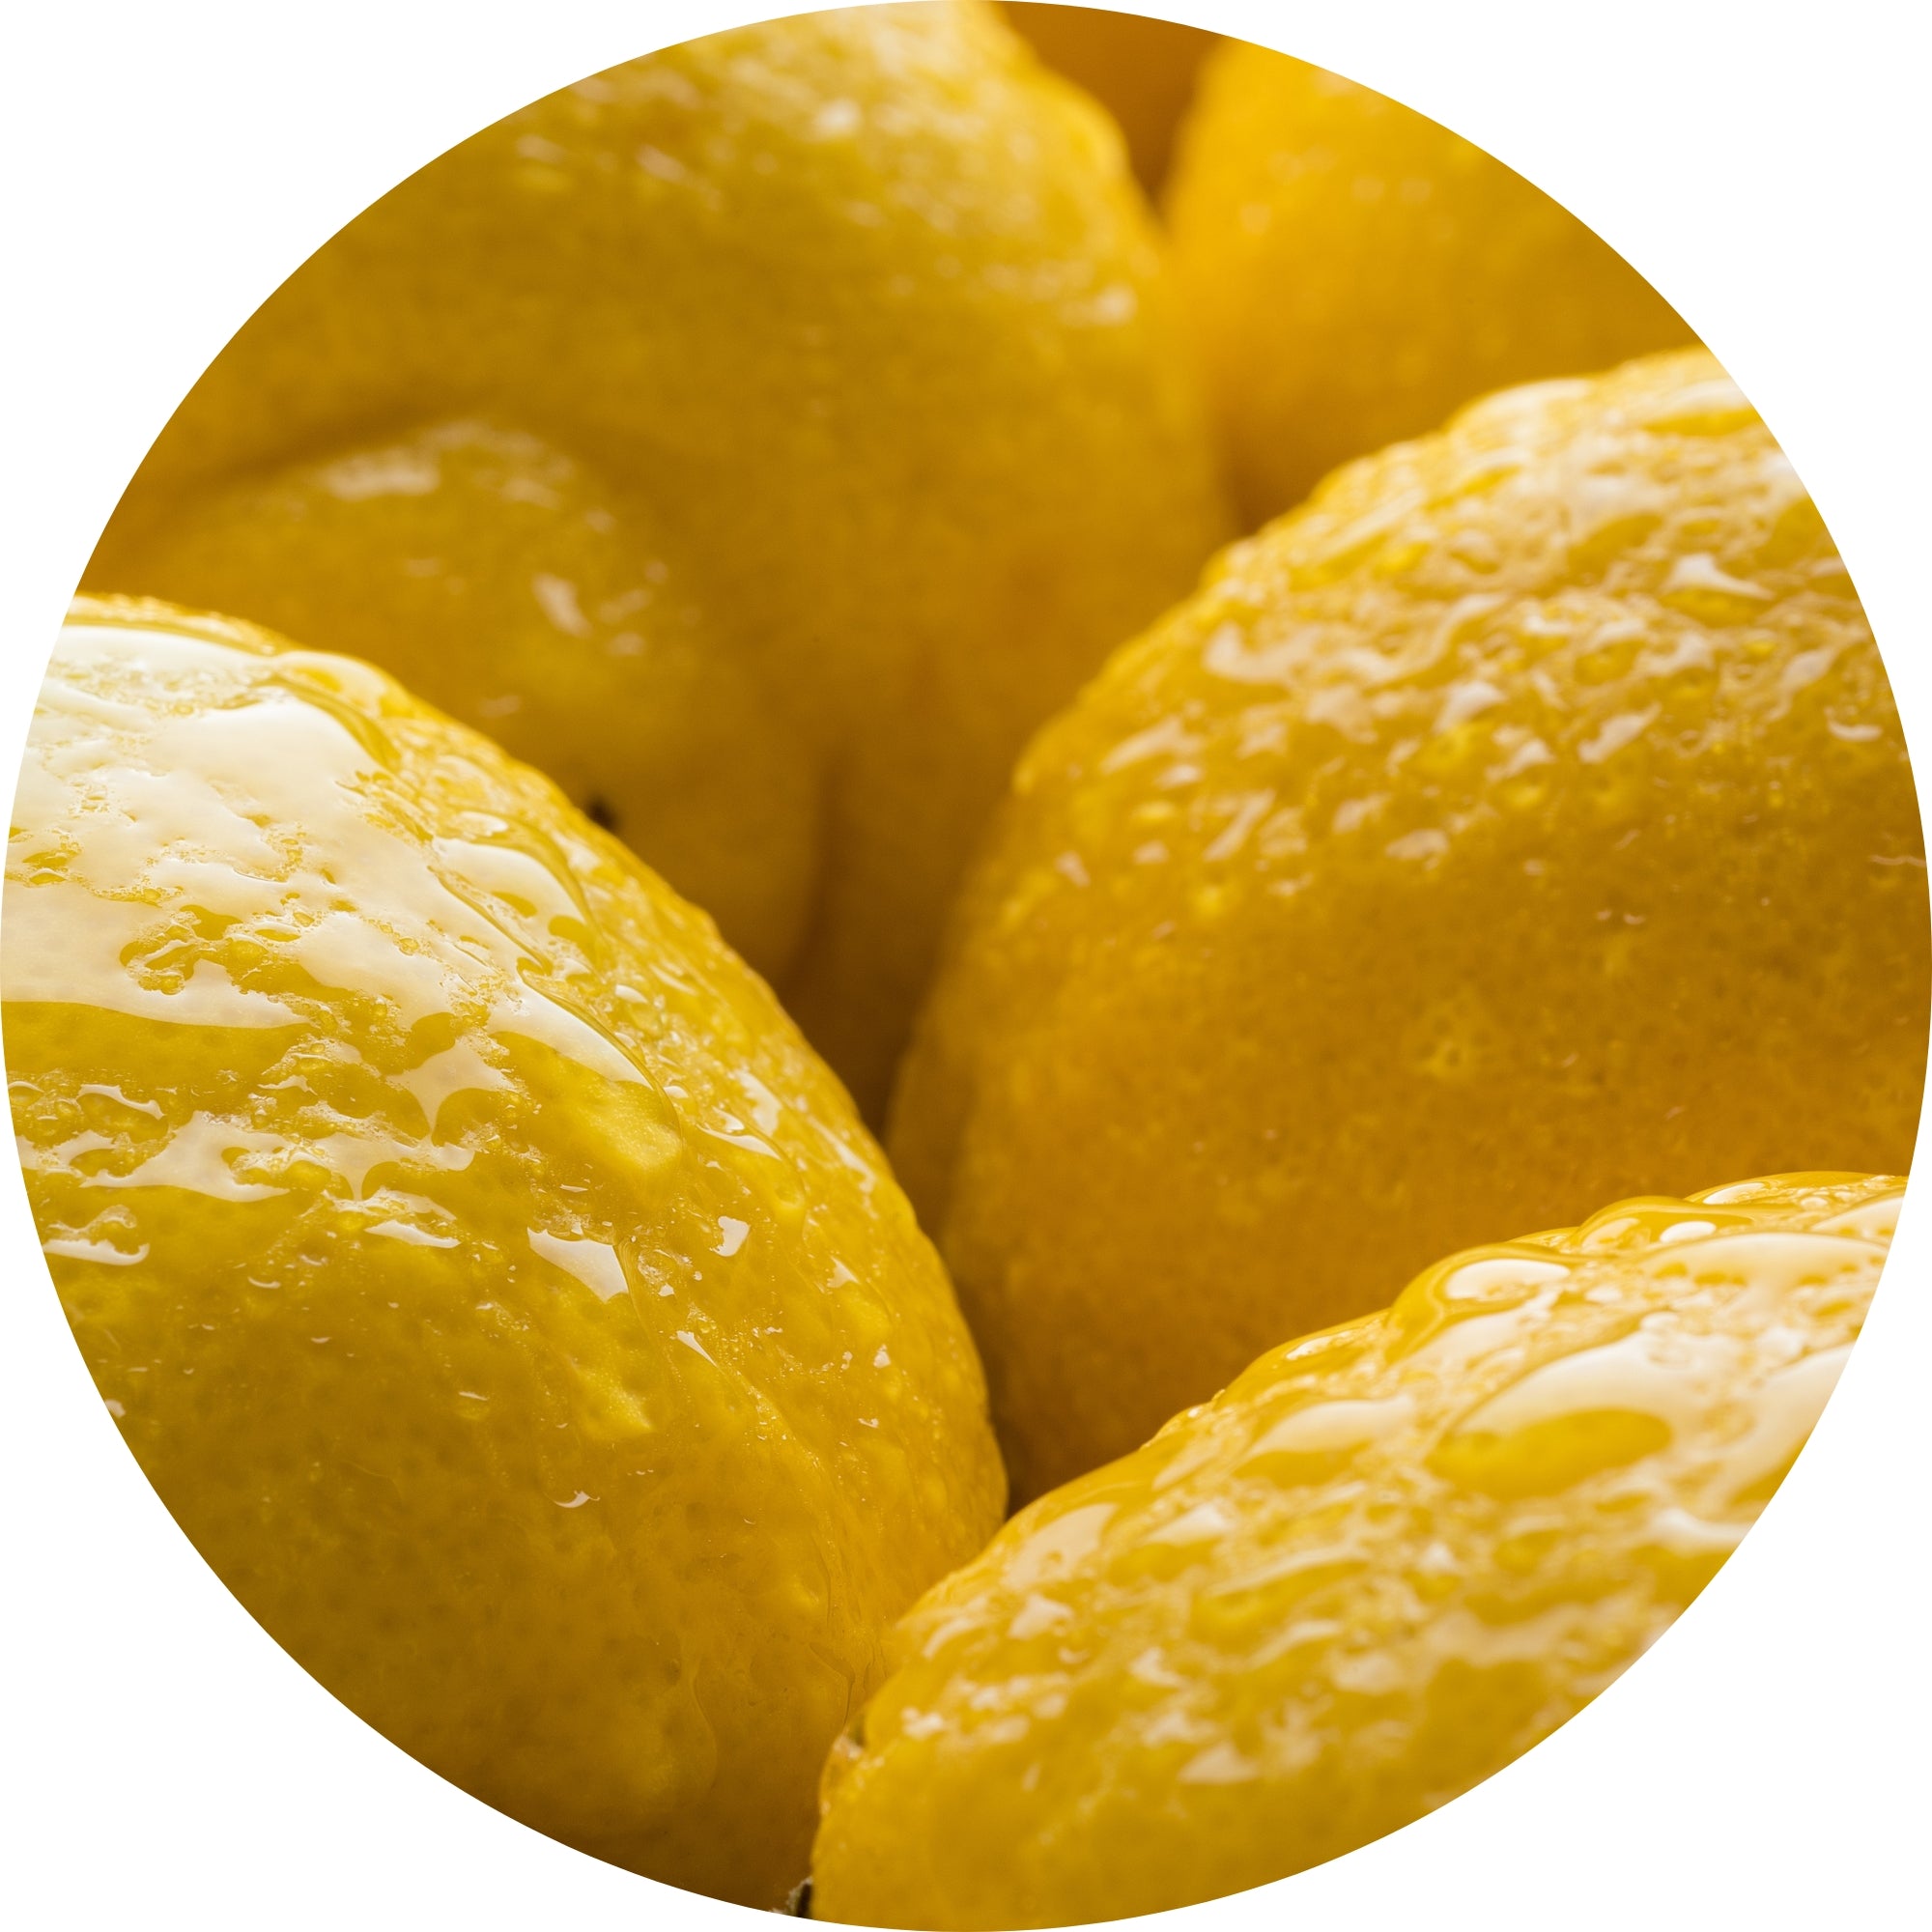 Exfo-Lite lemon ingredient